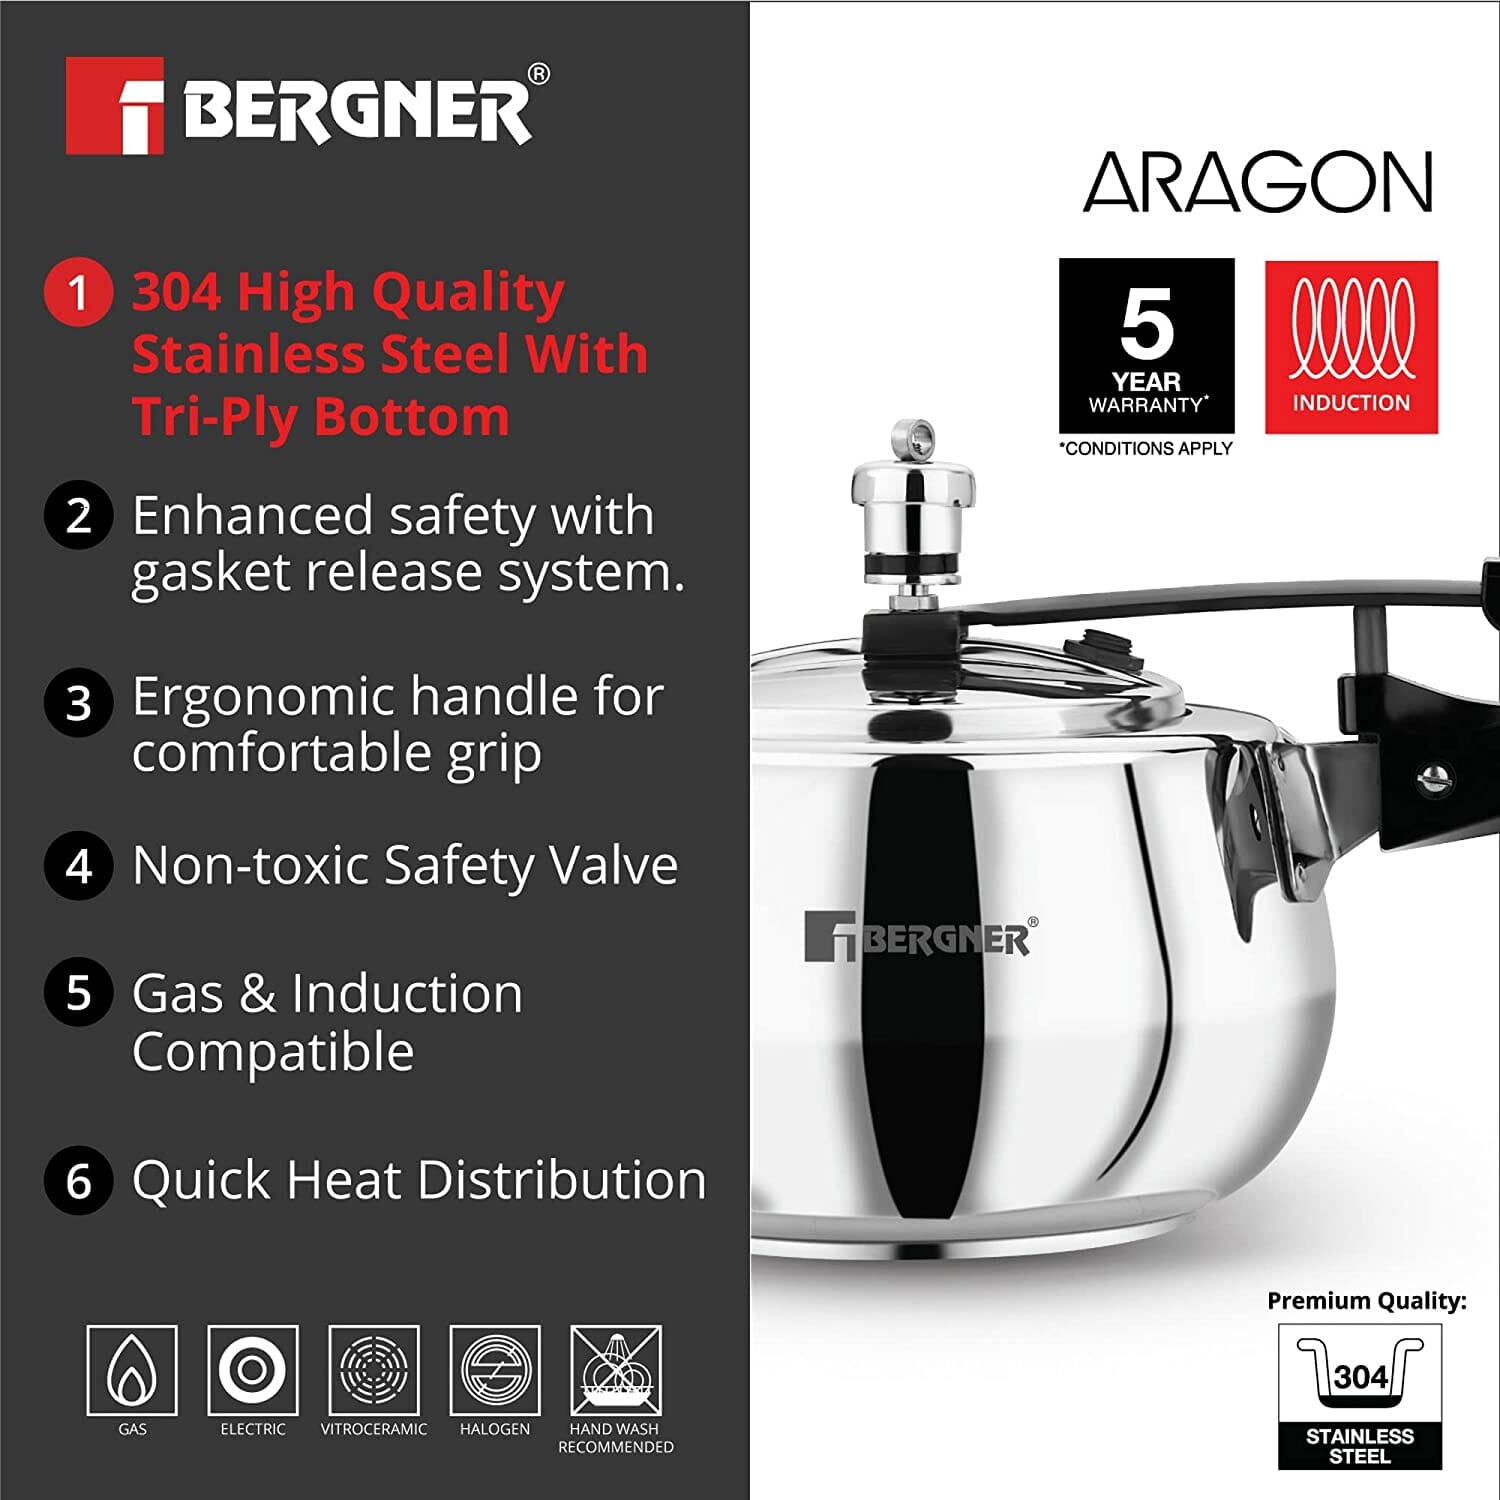 Bergner Aragon Stainless Steel Pressure Cooker, Silver - 5 Ltr